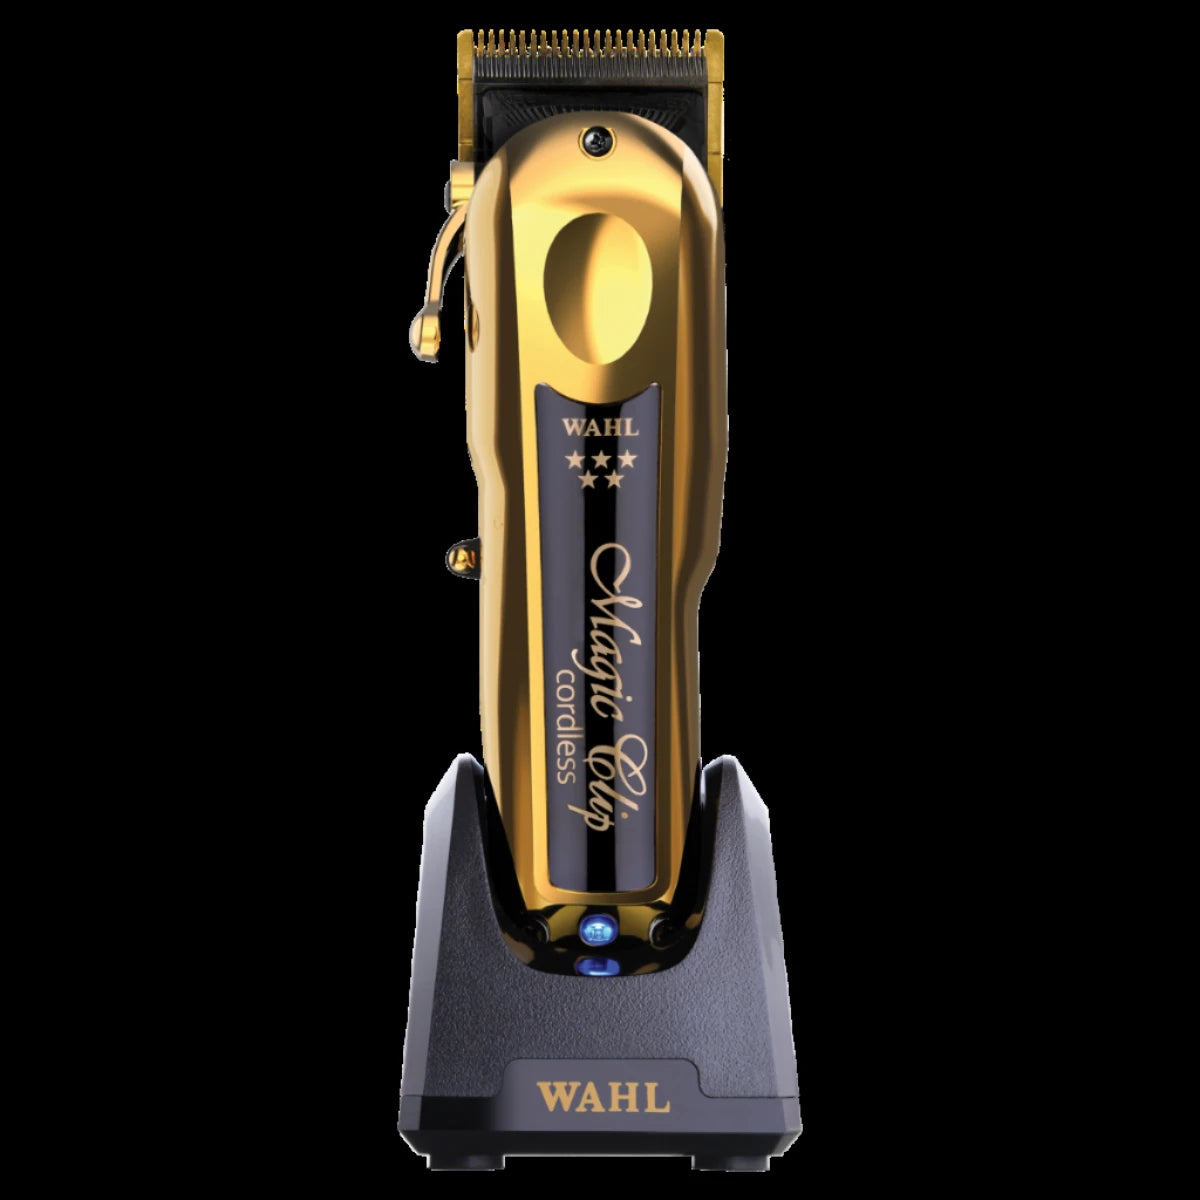 Wahl Magic Clip clipper Gold Edition Cordless